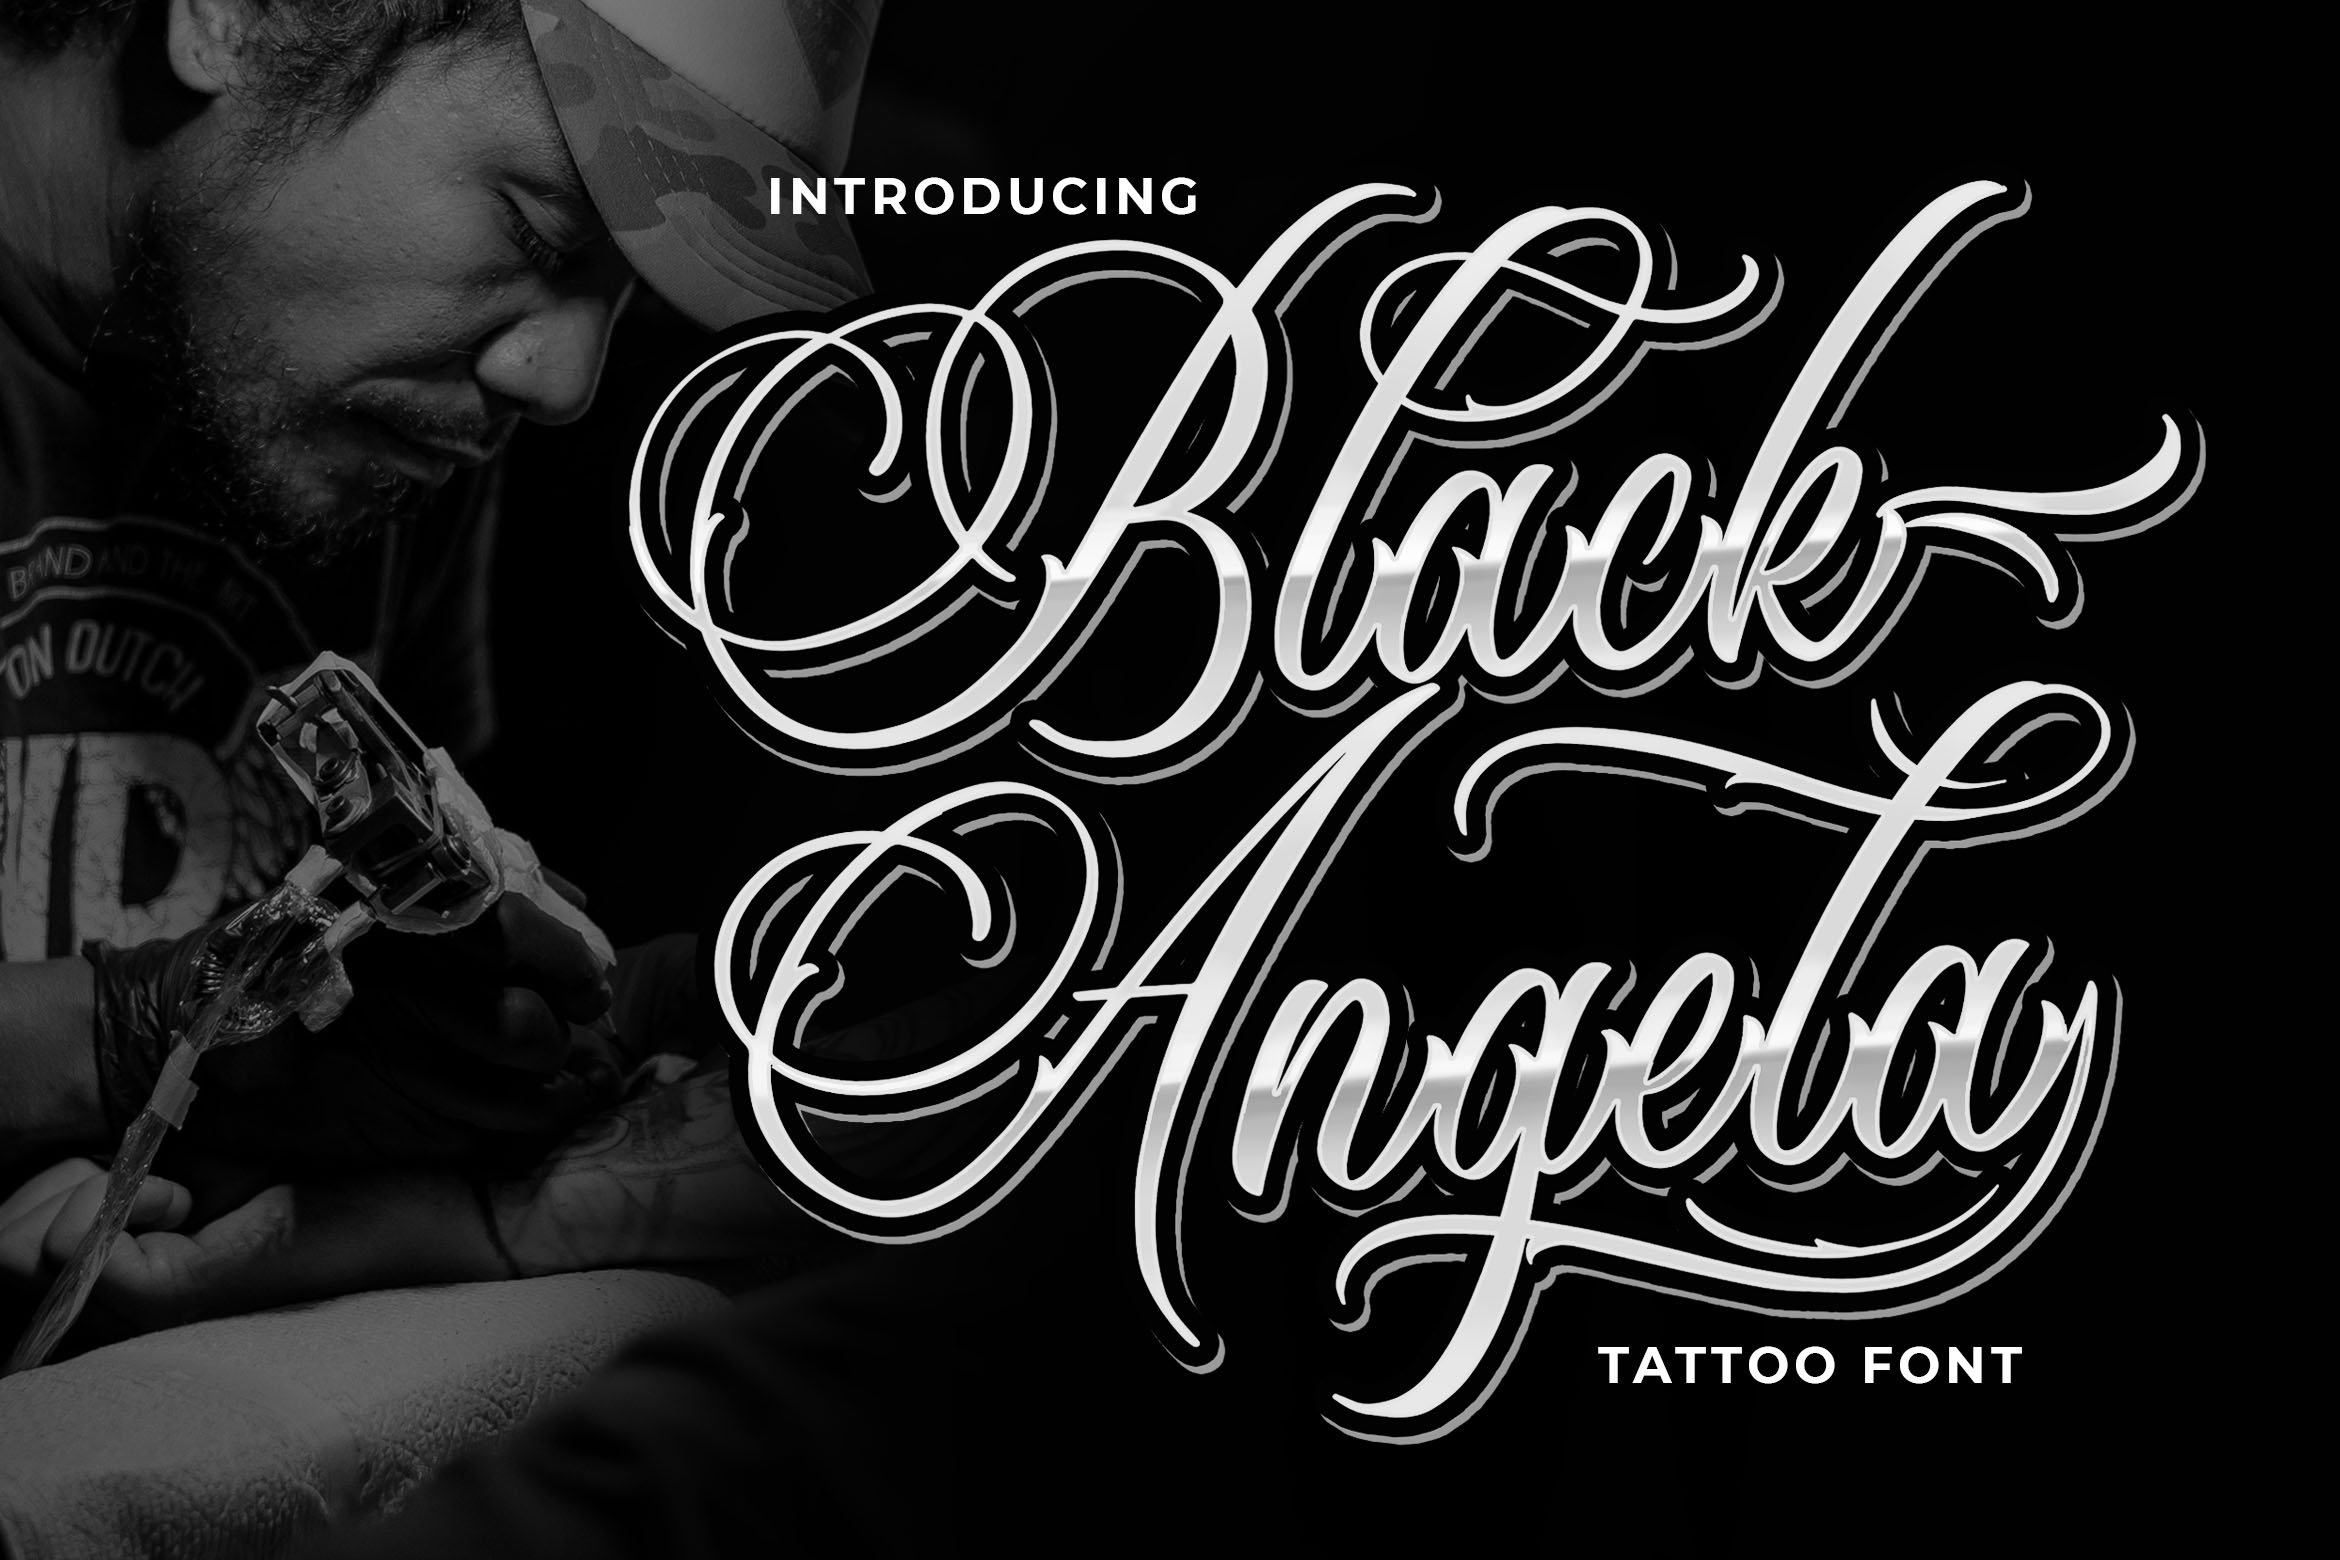 Black Angela - INTRO SALE!! cover image.